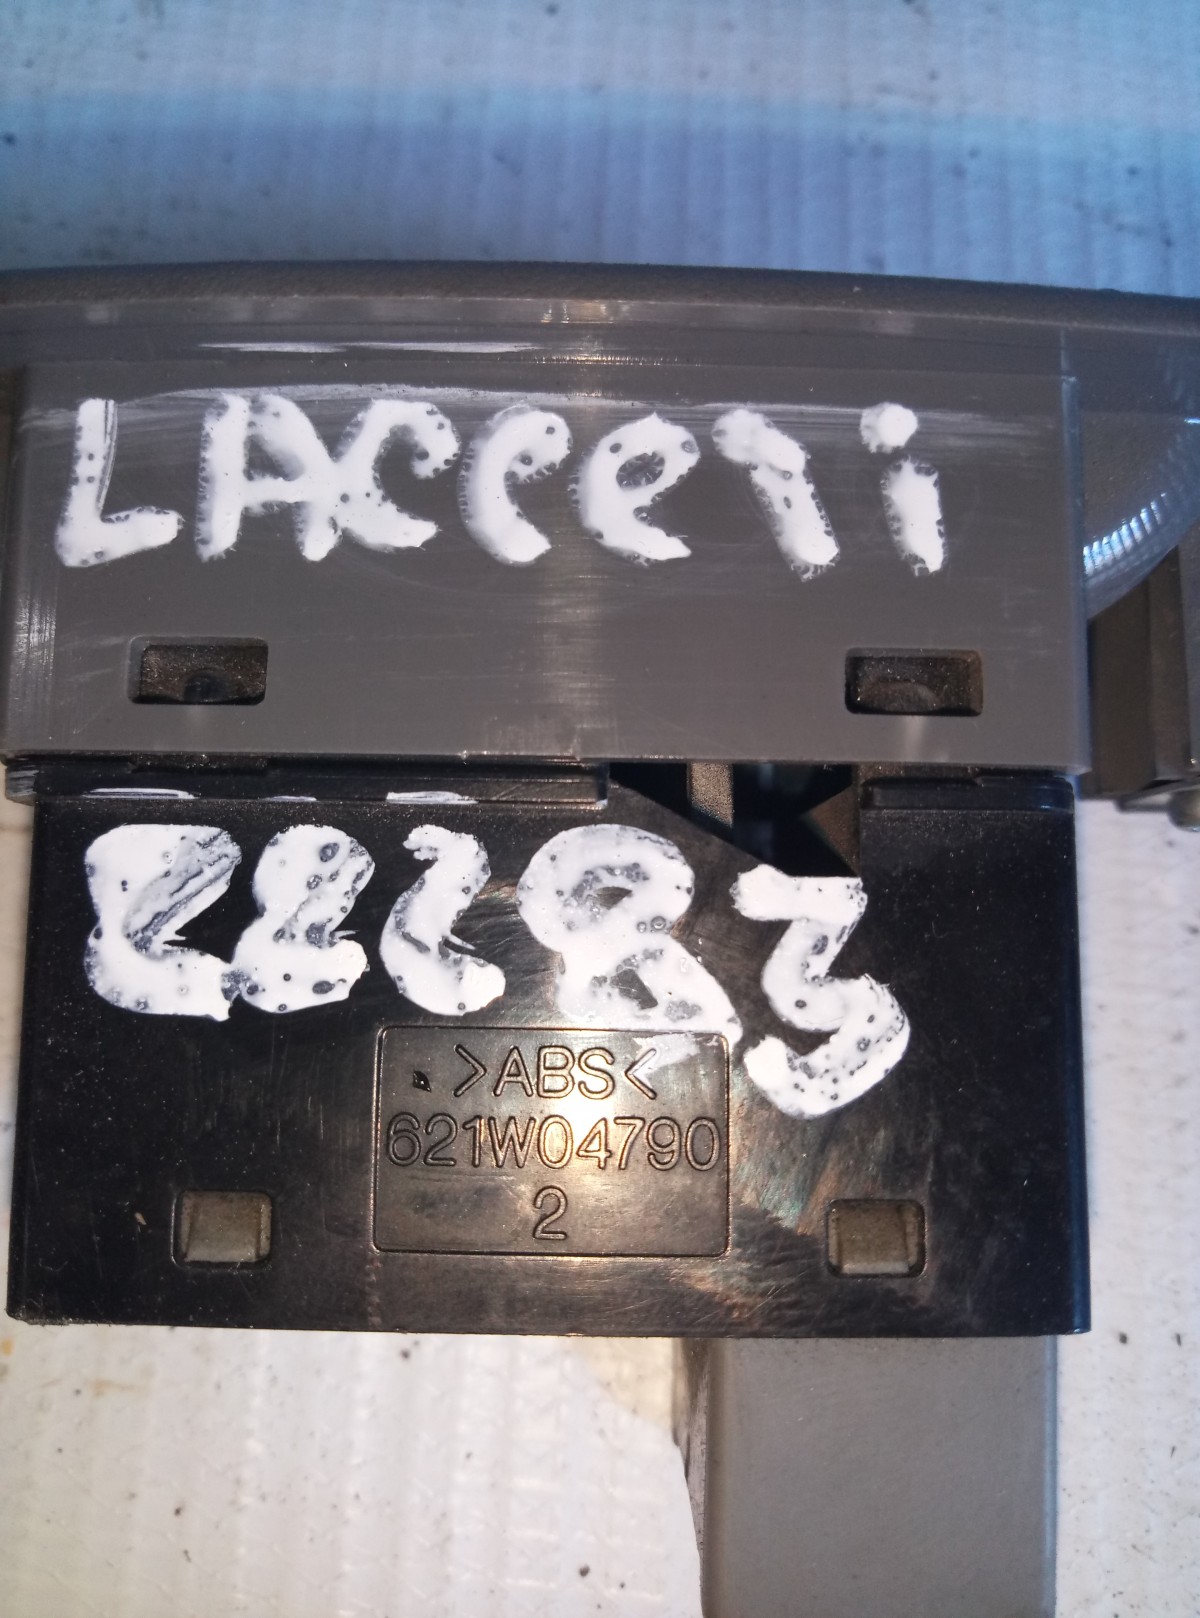 Кнопка стеклоподъемника Chevrolet Lacetti задняя правая    621W047902 на Chevrolet Lacetti 